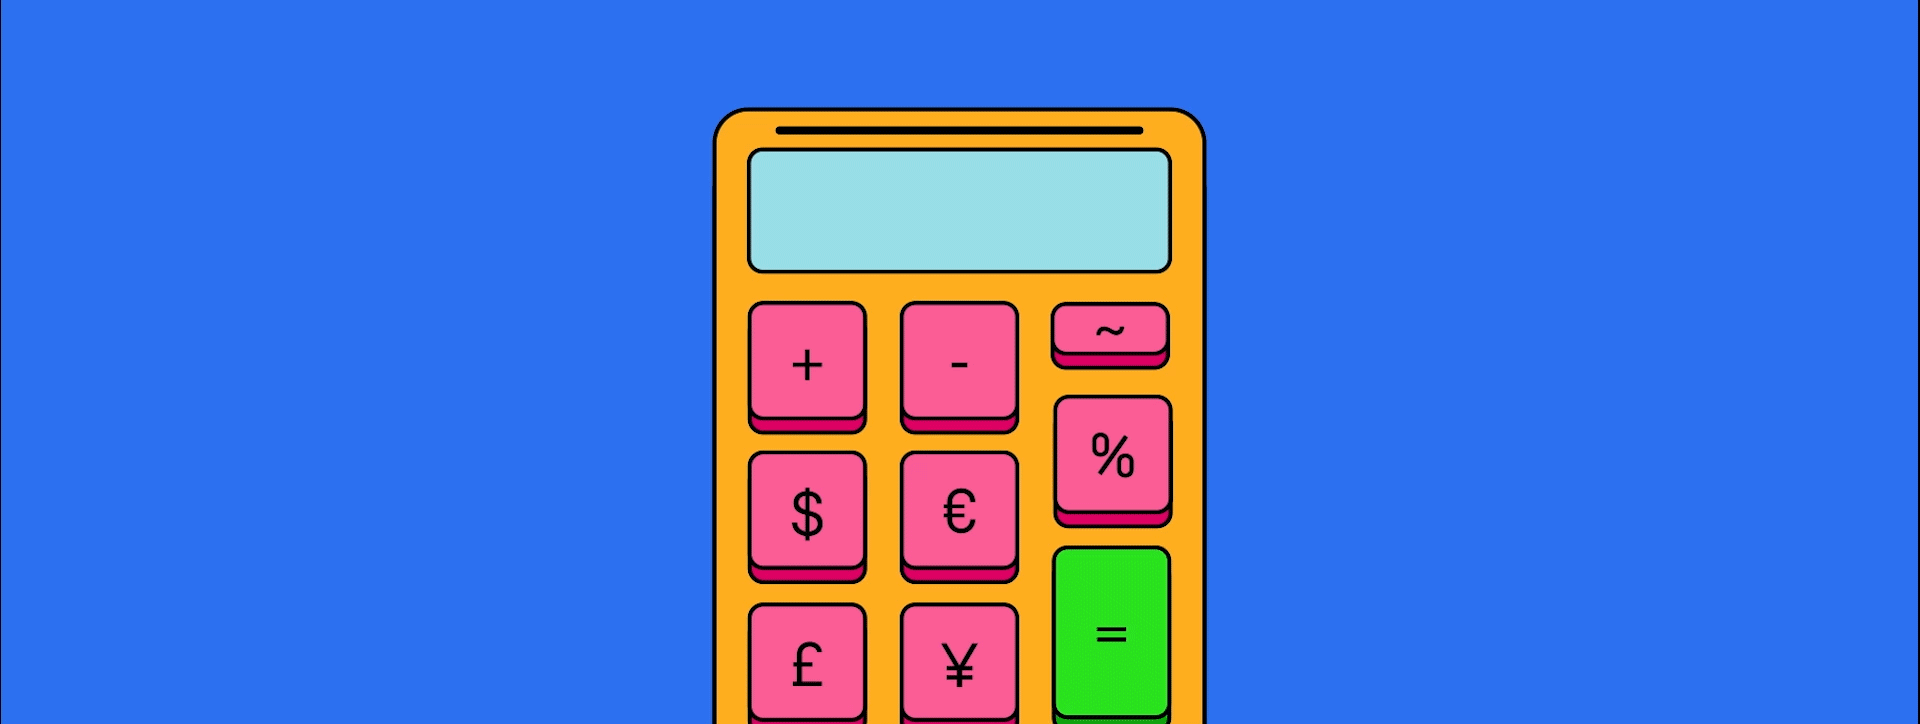 Salary-Calculator-GIF-Blog